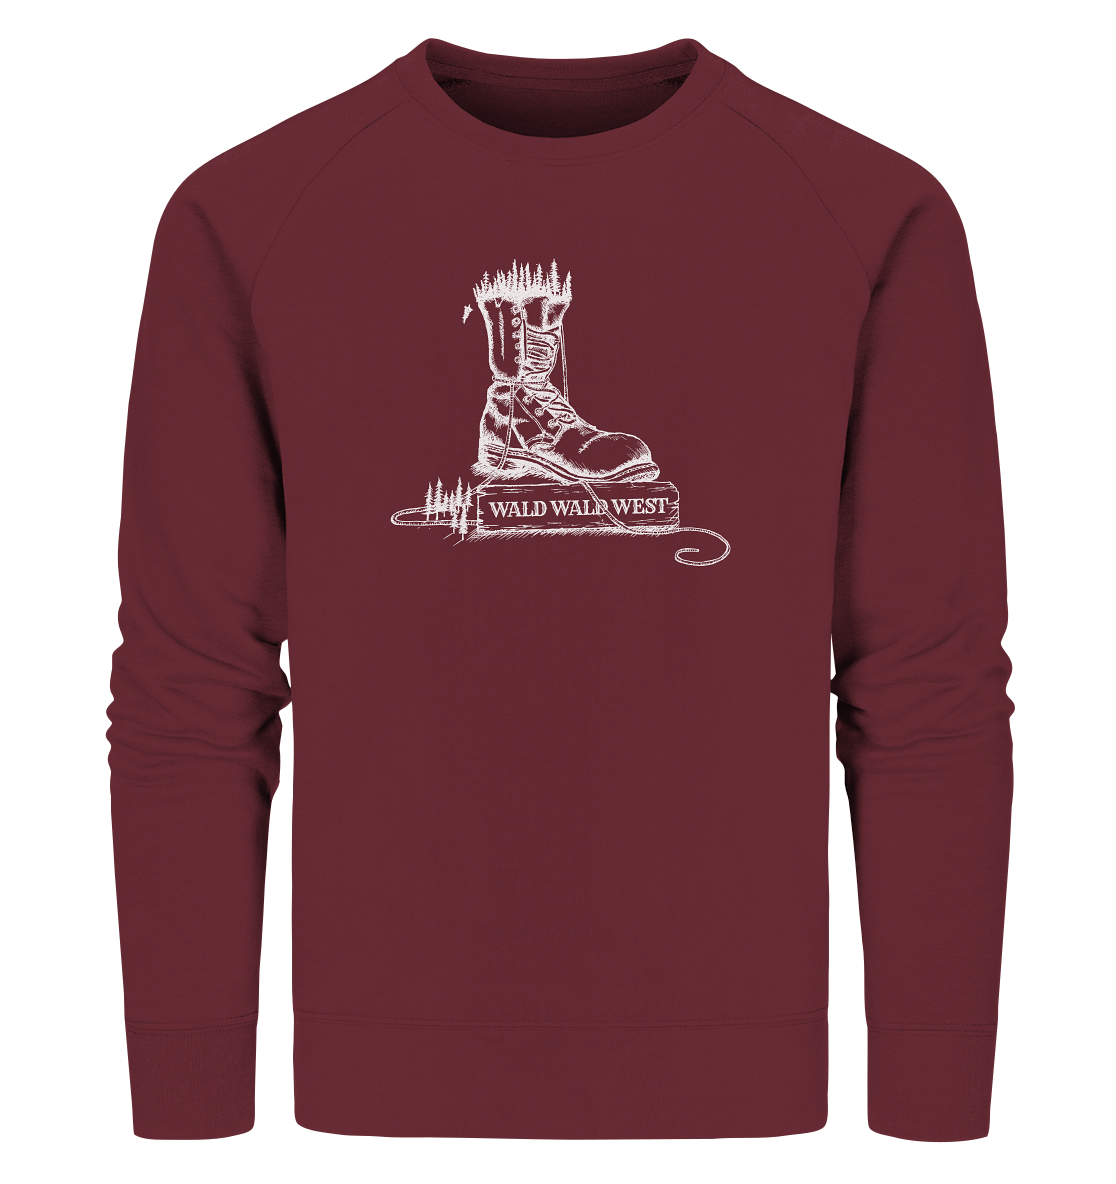 front-organic-sweatshirt-672b34-1116x.png